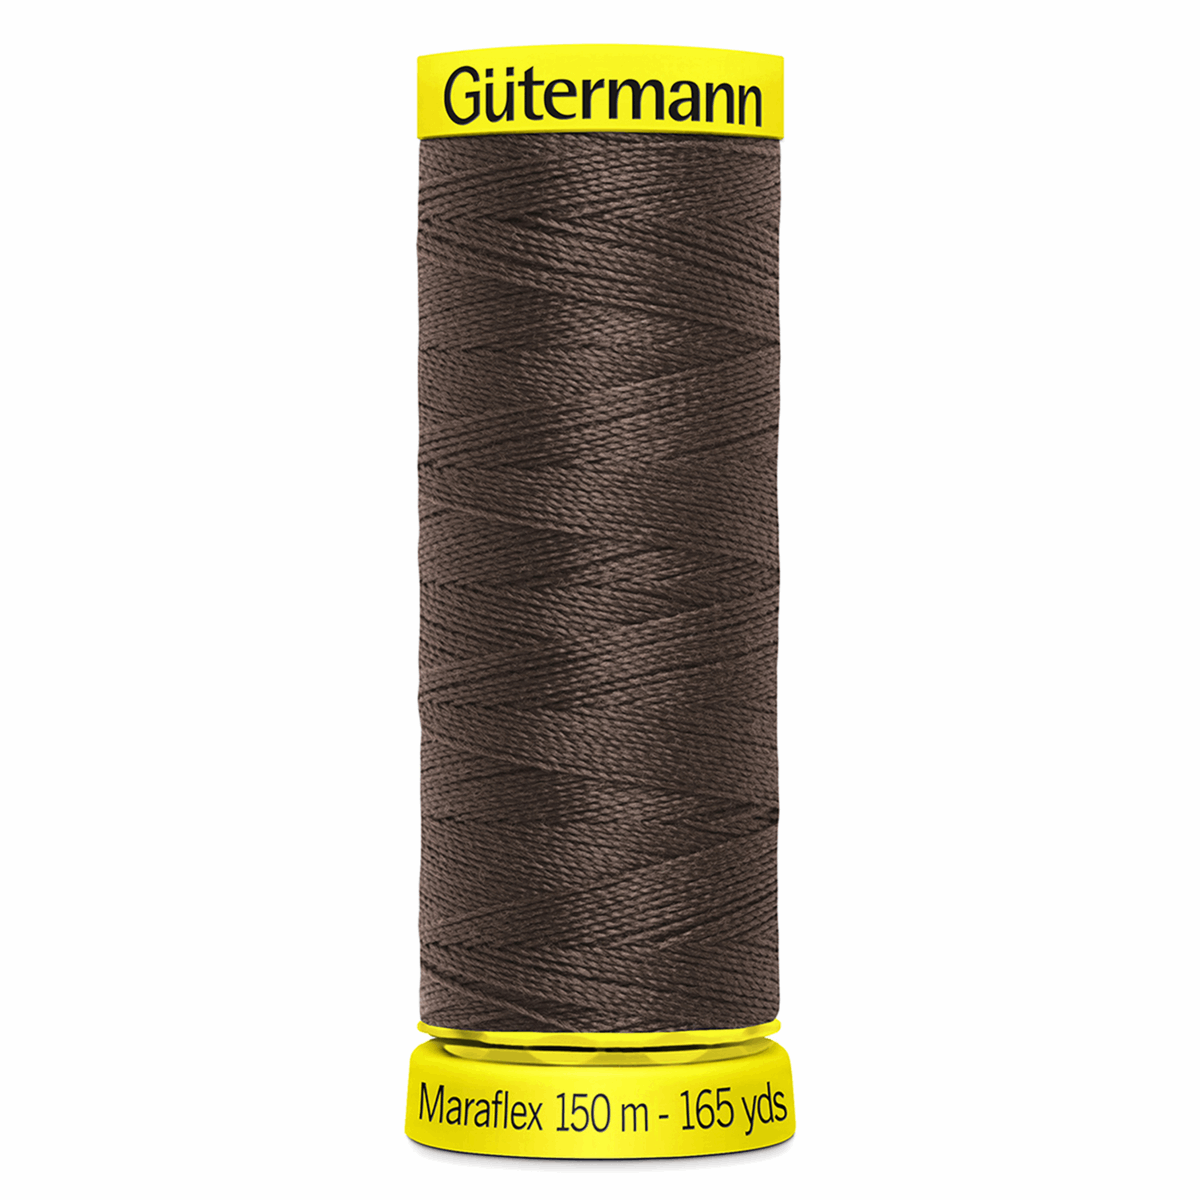 Gutermann Maraflex Elastic Sewing Thread 150m Brown 694